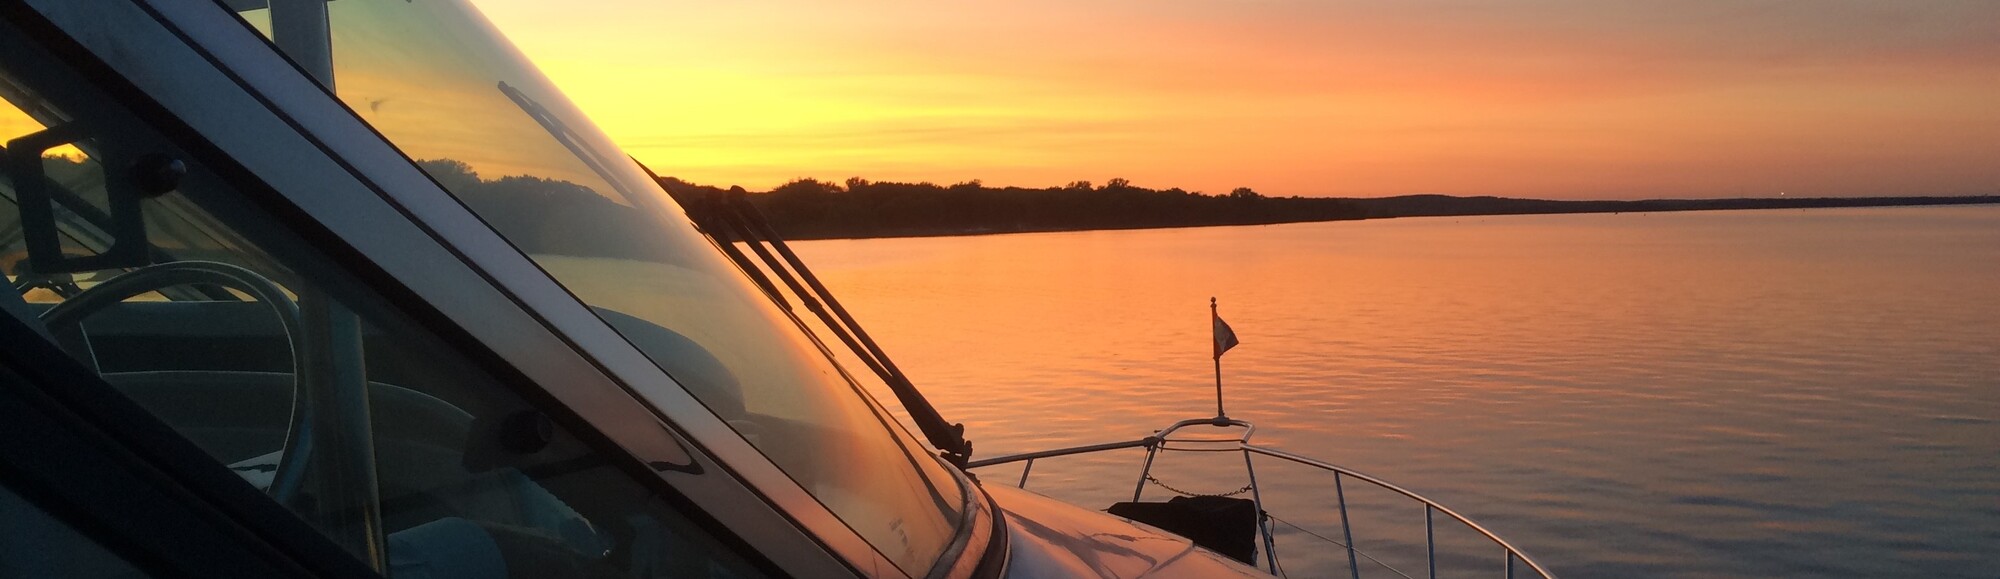 Boat sunset cropped.jpg